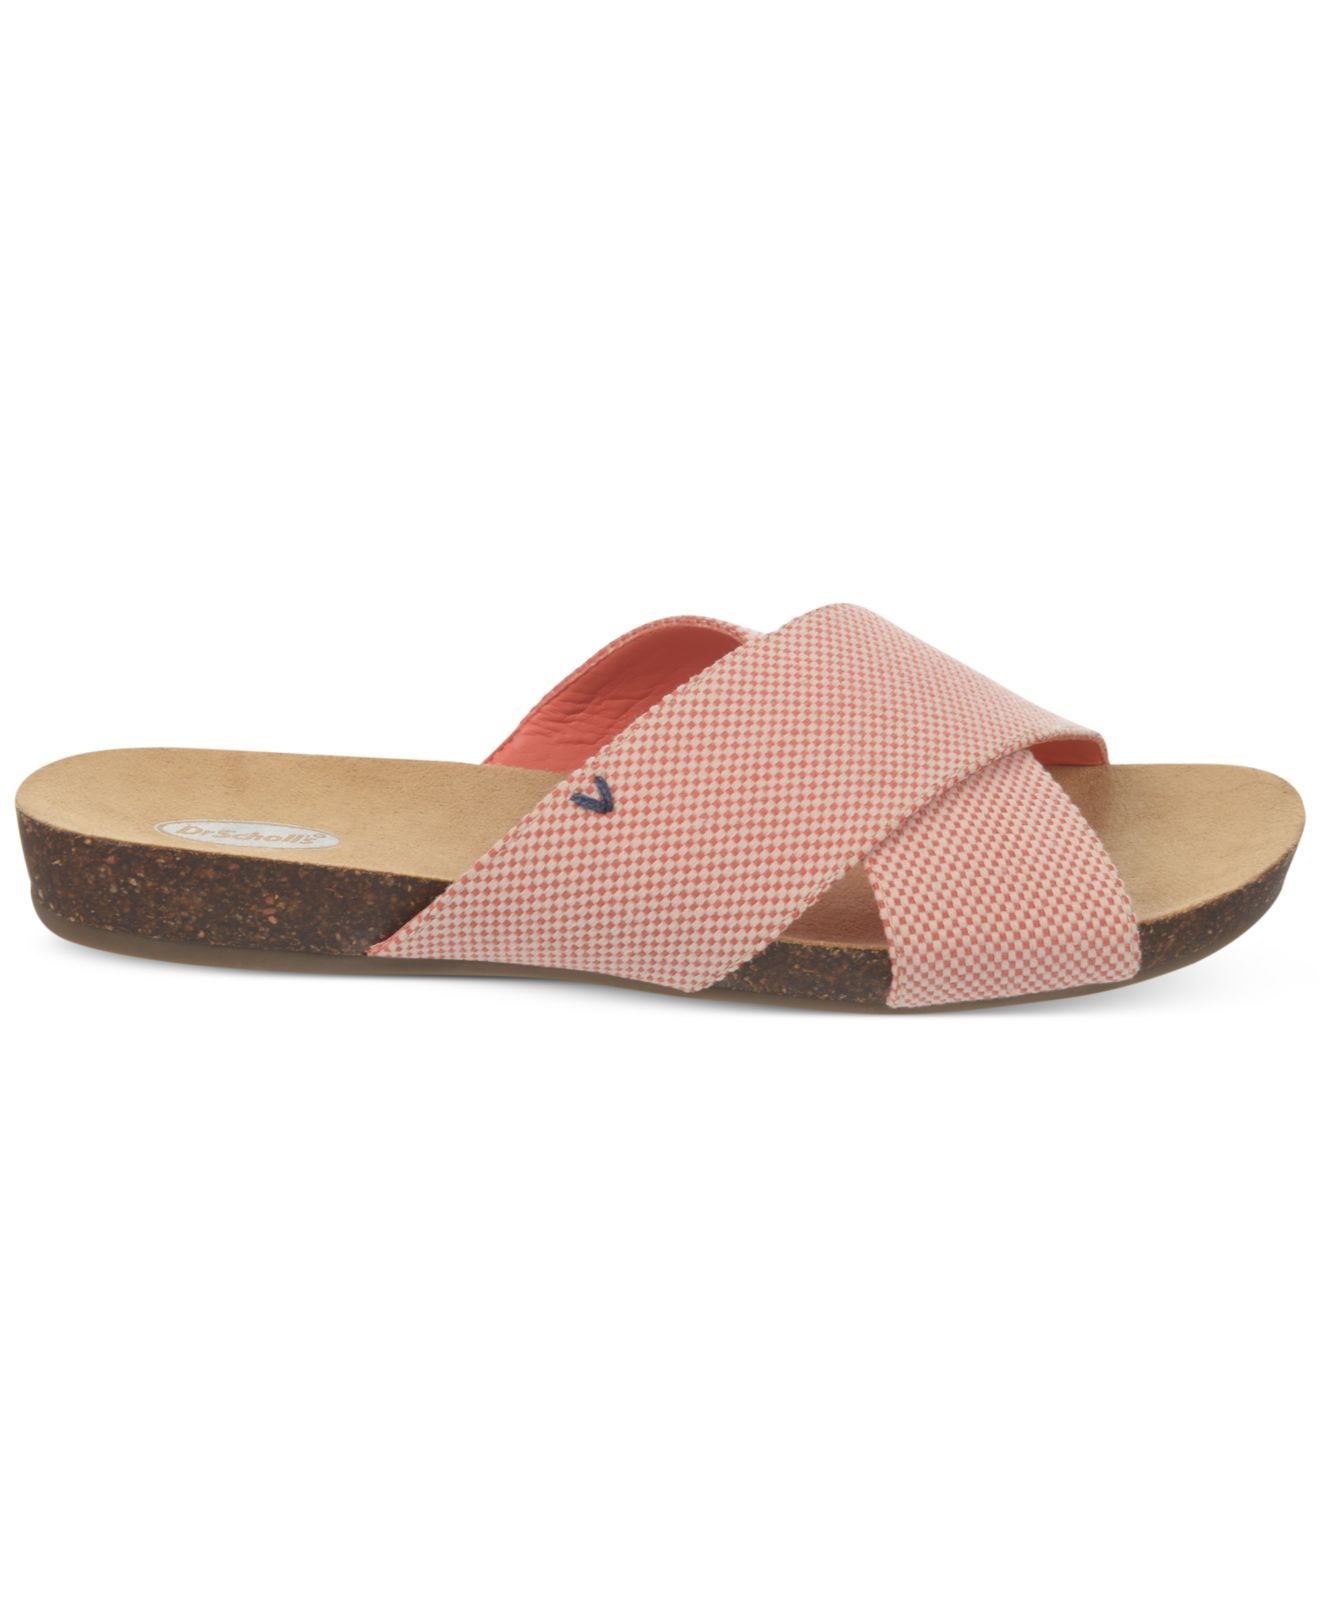 Lyst - Dr. Scholls Rae Flat Sandals in Pink